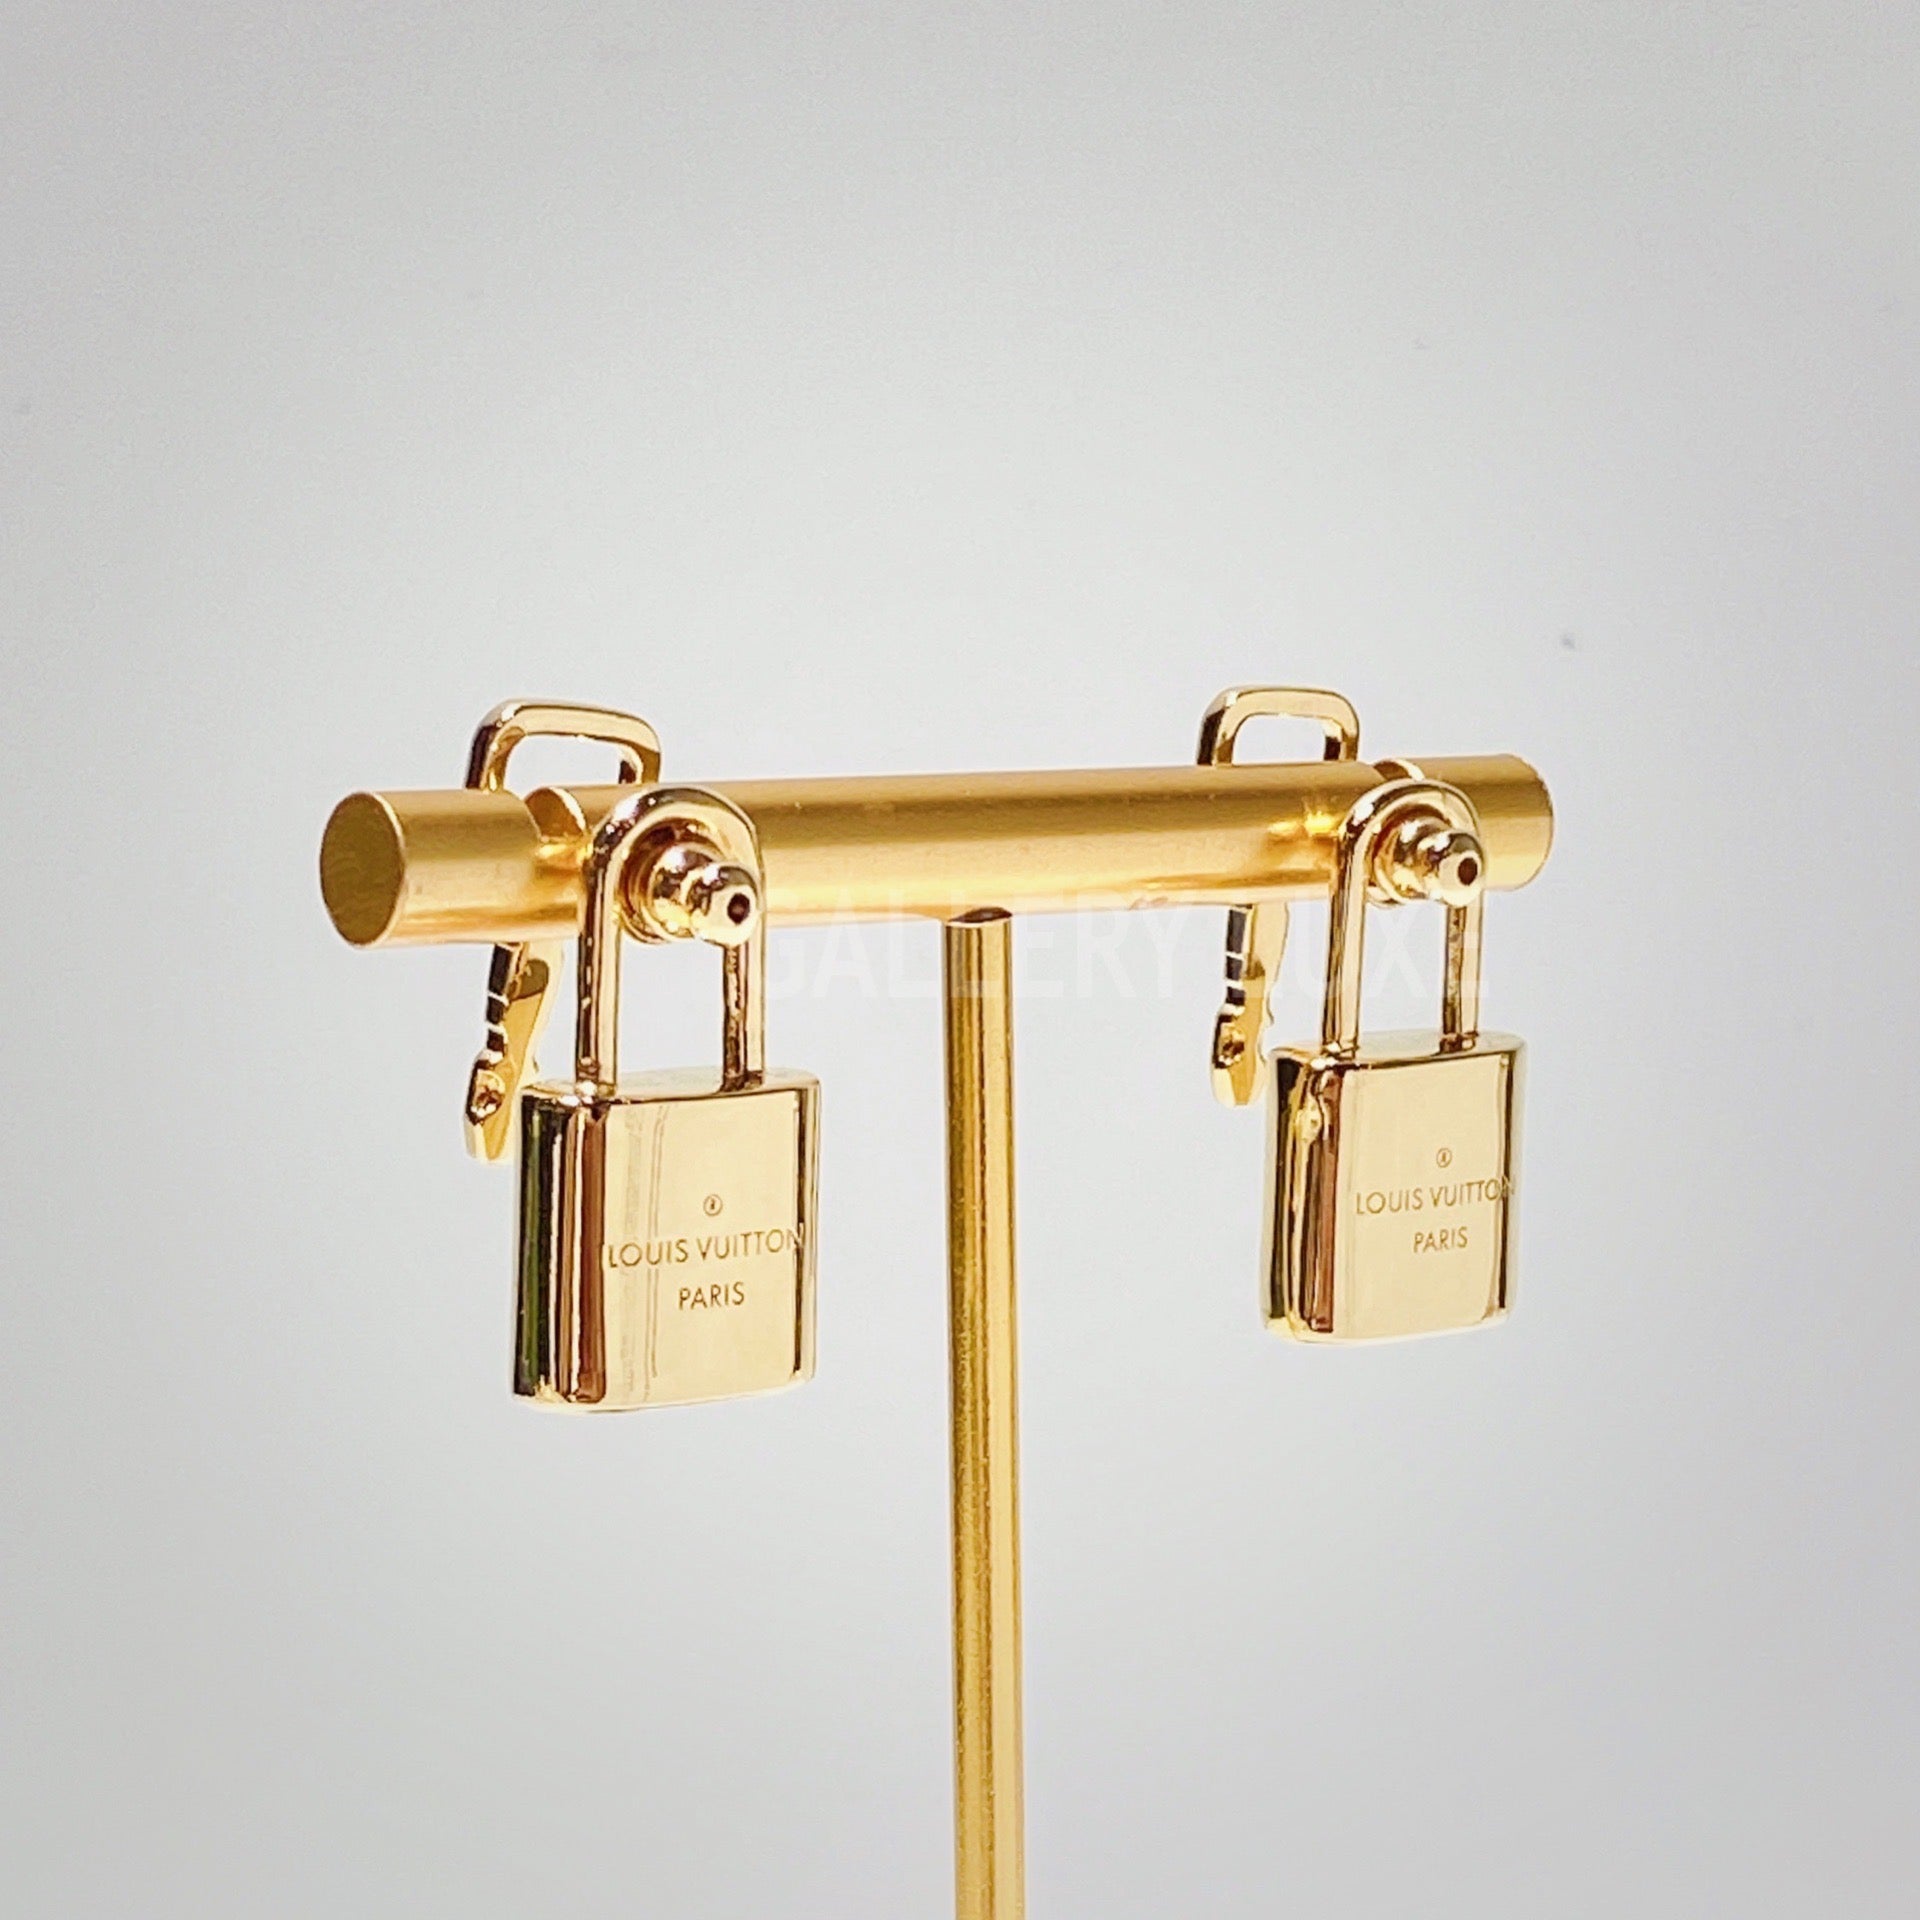 Louis Vuitton Earring 403461